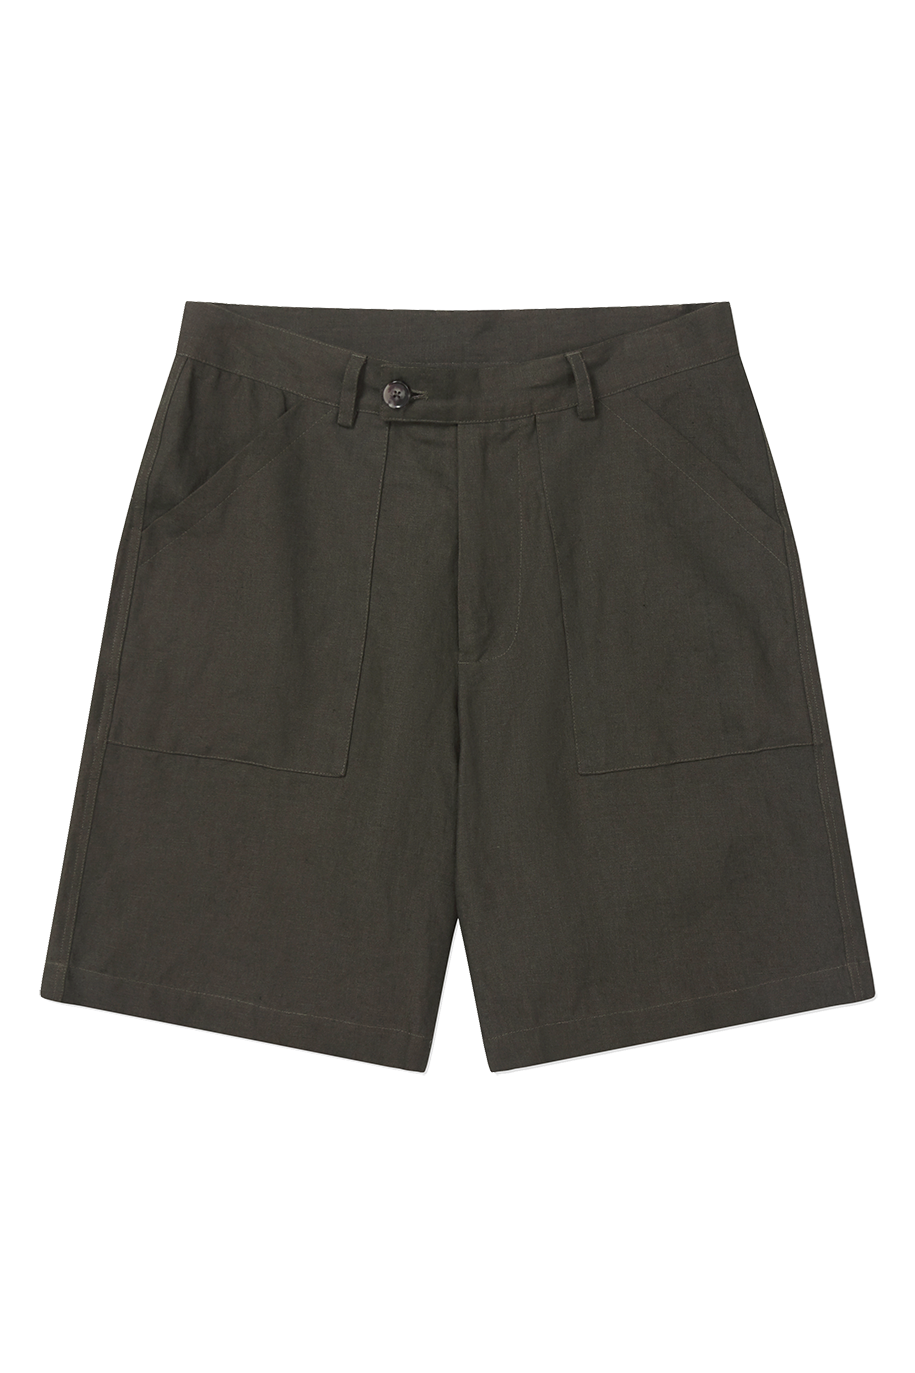 Patch Pocket Shorts 9 inch Arabica